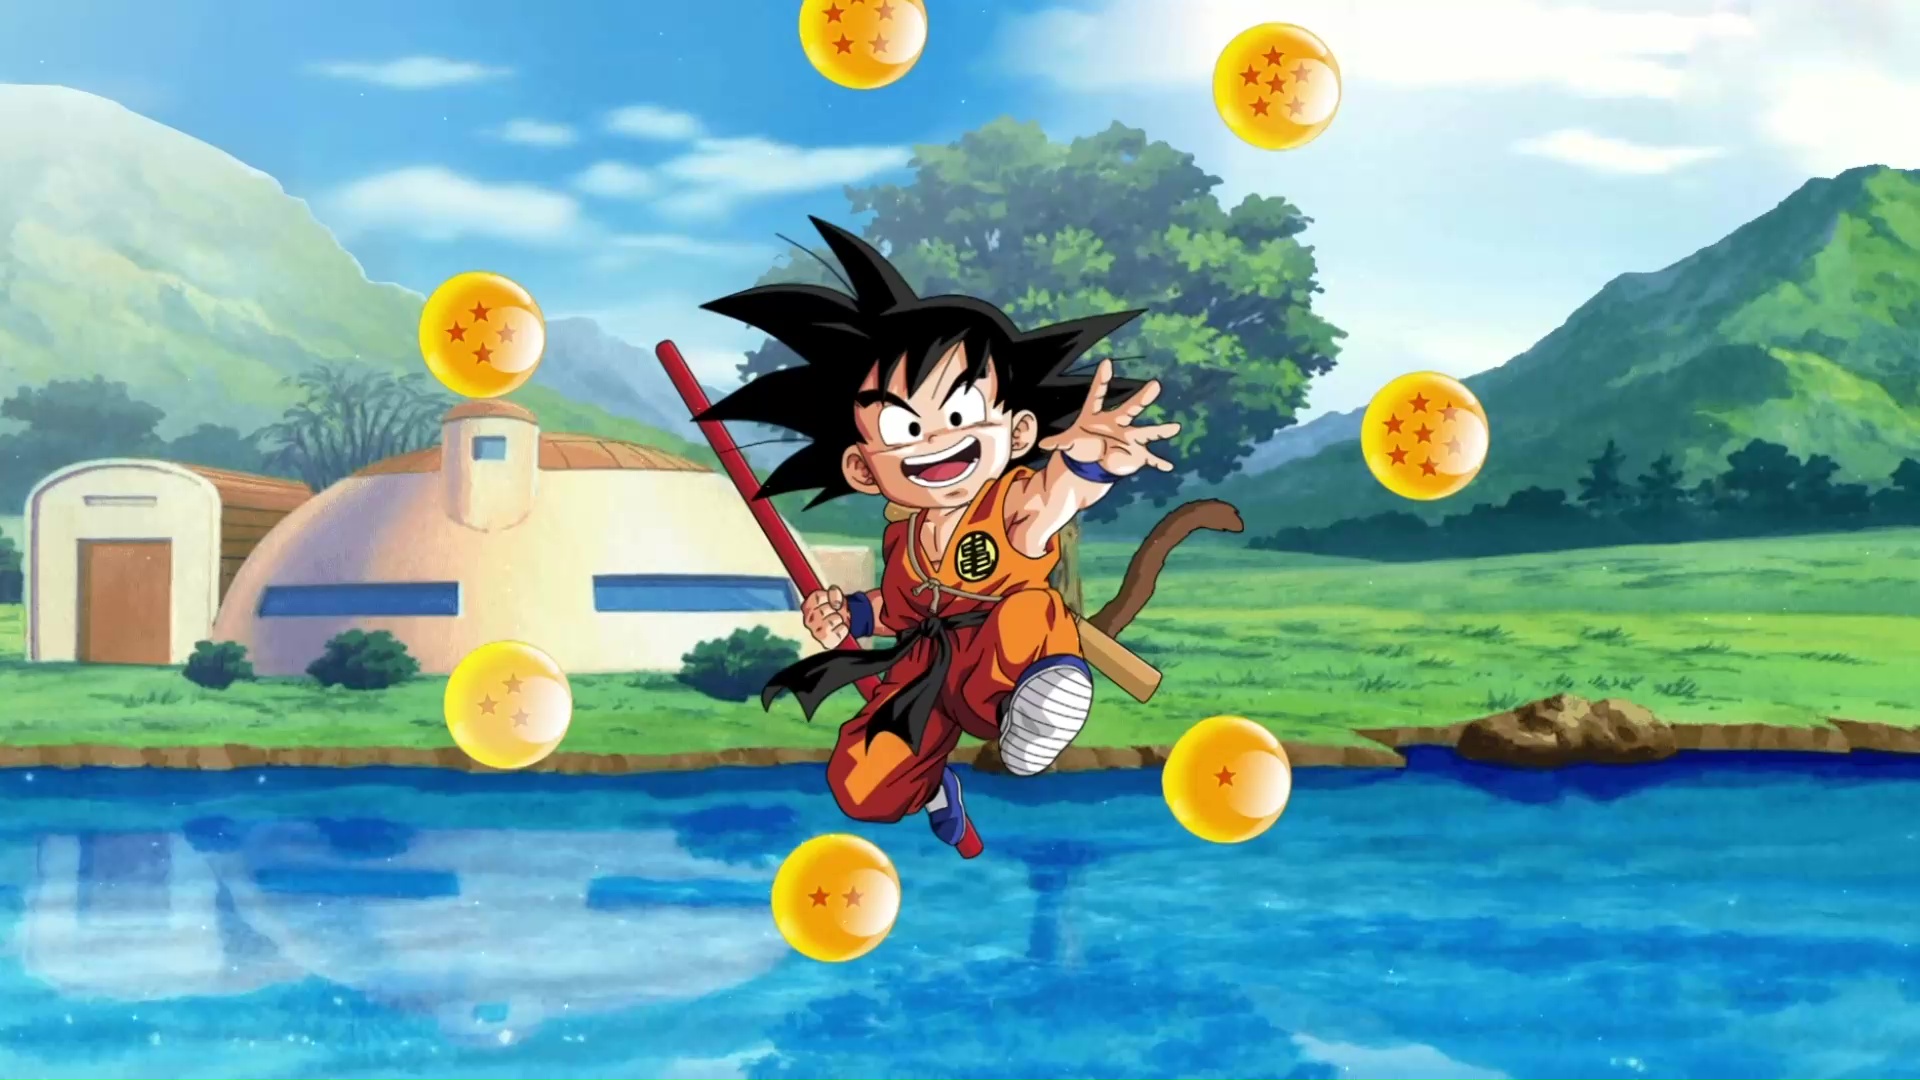 Goku Archives - Live Desktop Wallpapers